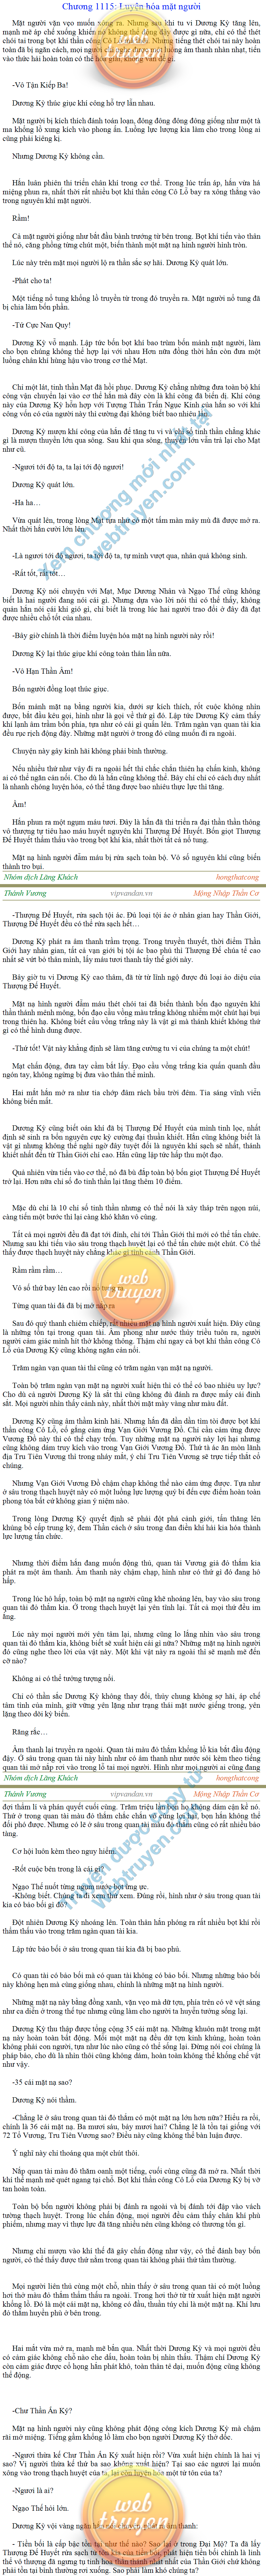 Thanh-vuong-1115.png